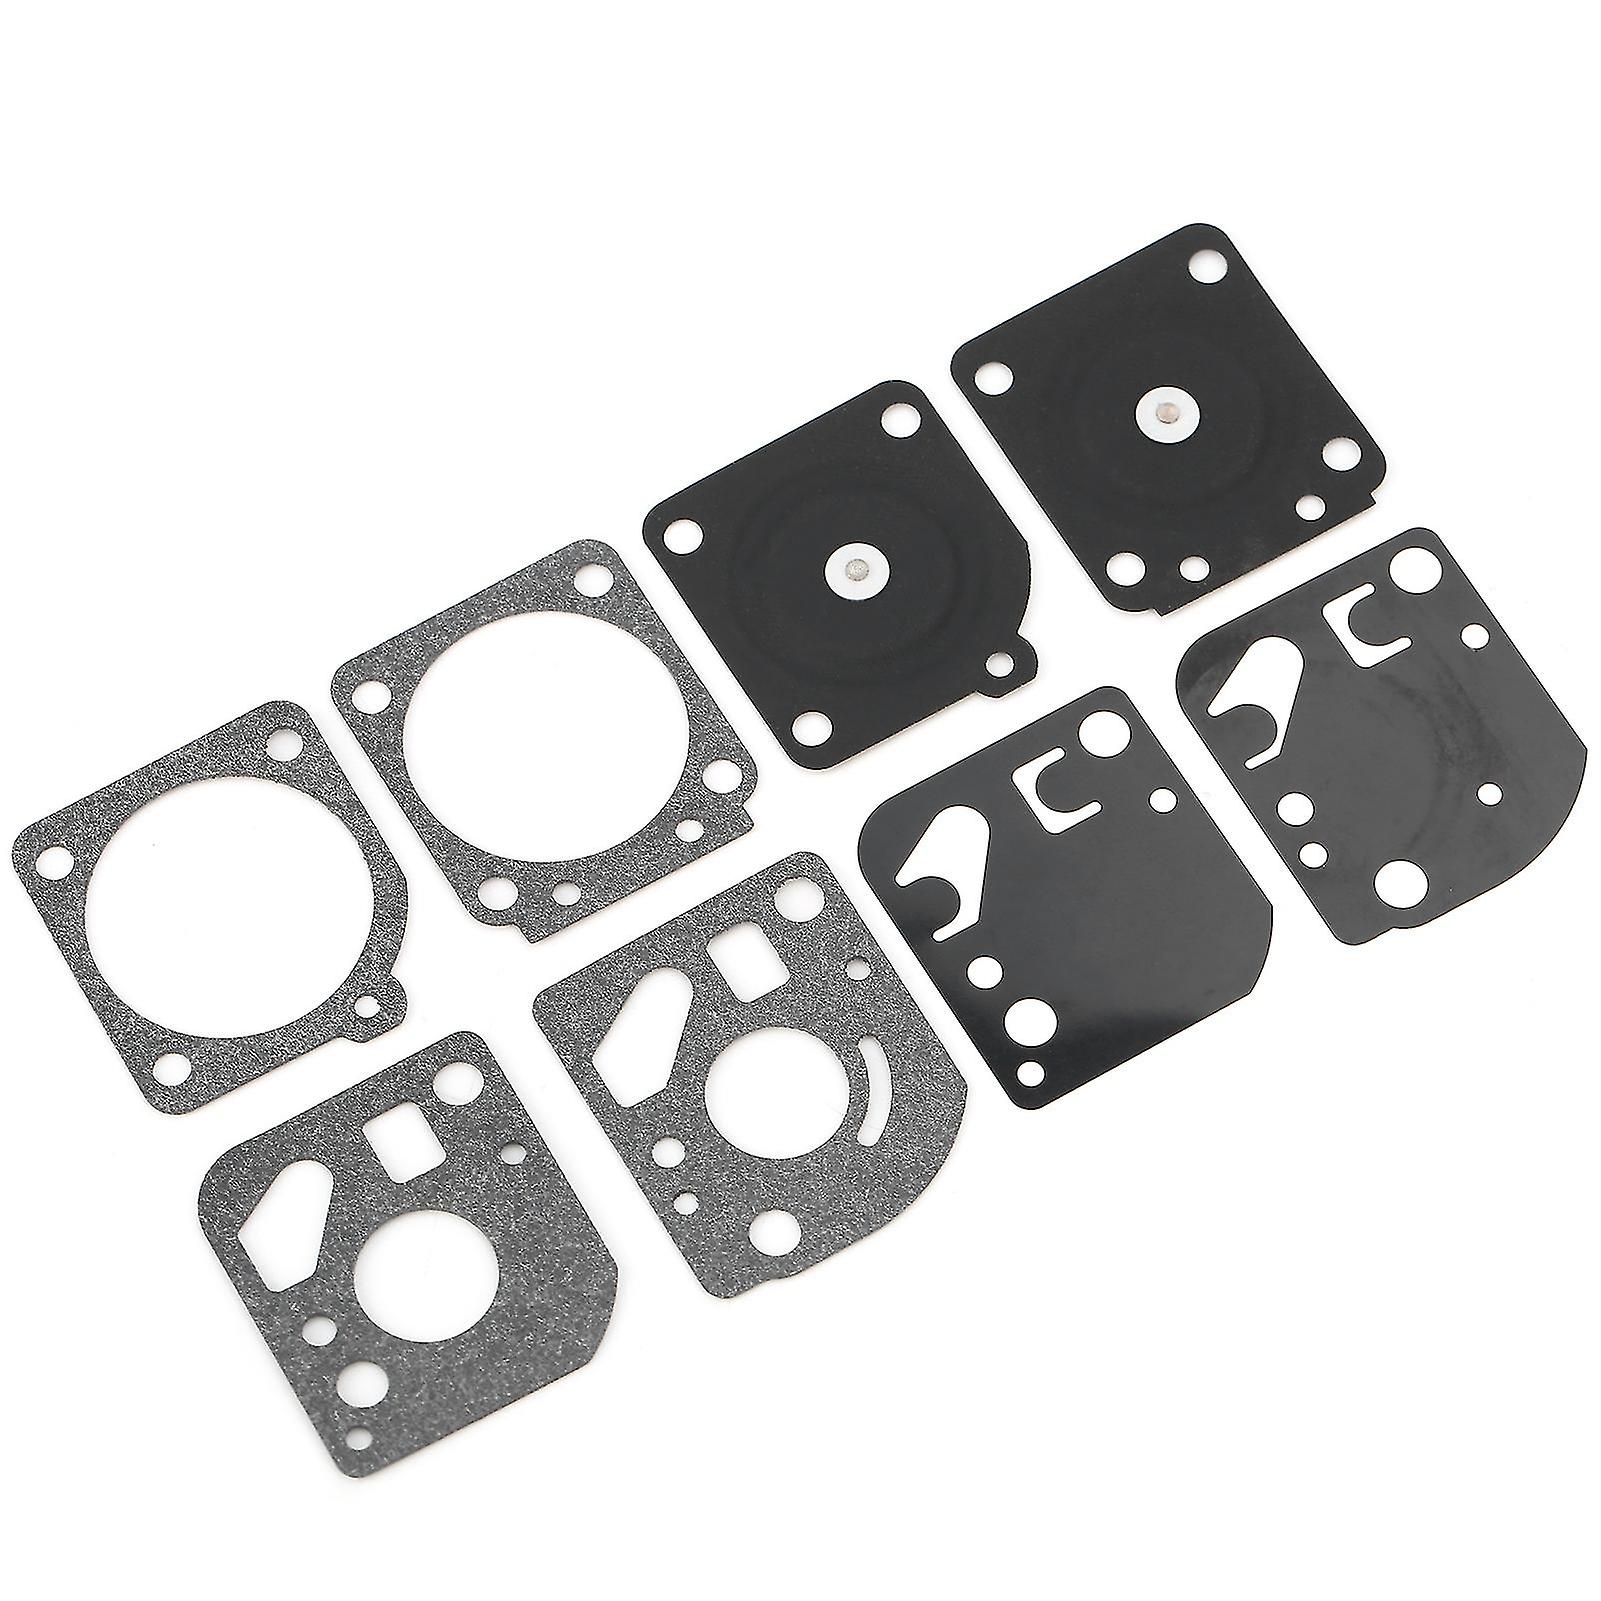 Carburetor Repair Kit Rebuild Set Parts Industrial Supplies Rb‑29 for Power Tools 6131/6231